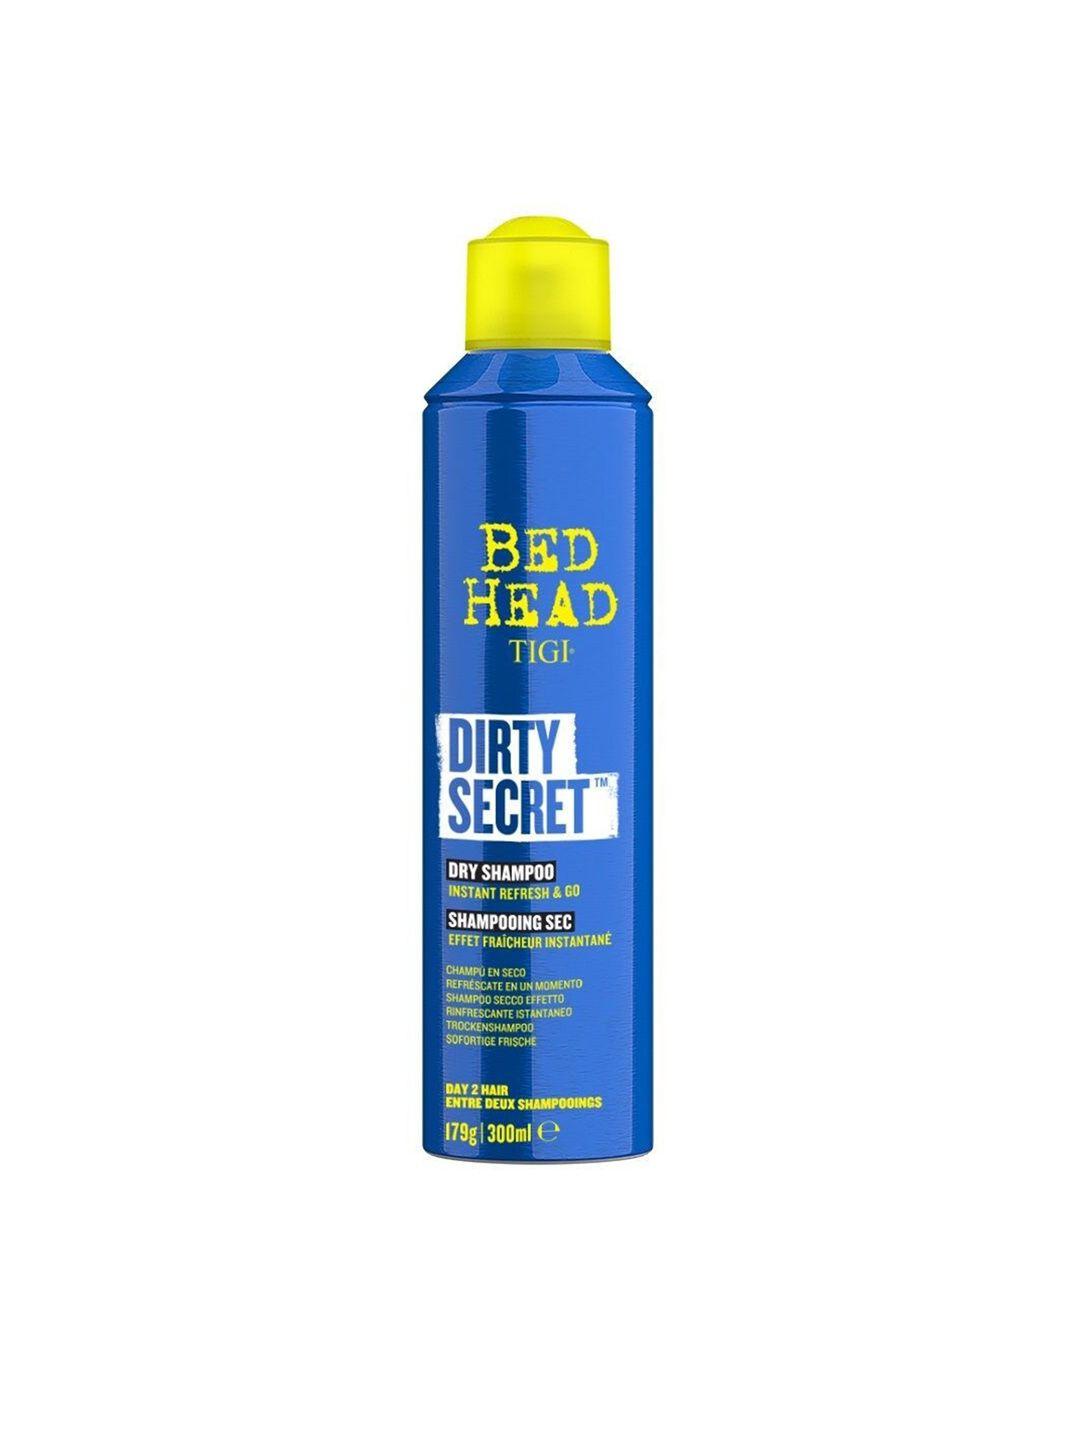 tigi bed head dirty secret dry shampoo for instant refresh & go - 300ml